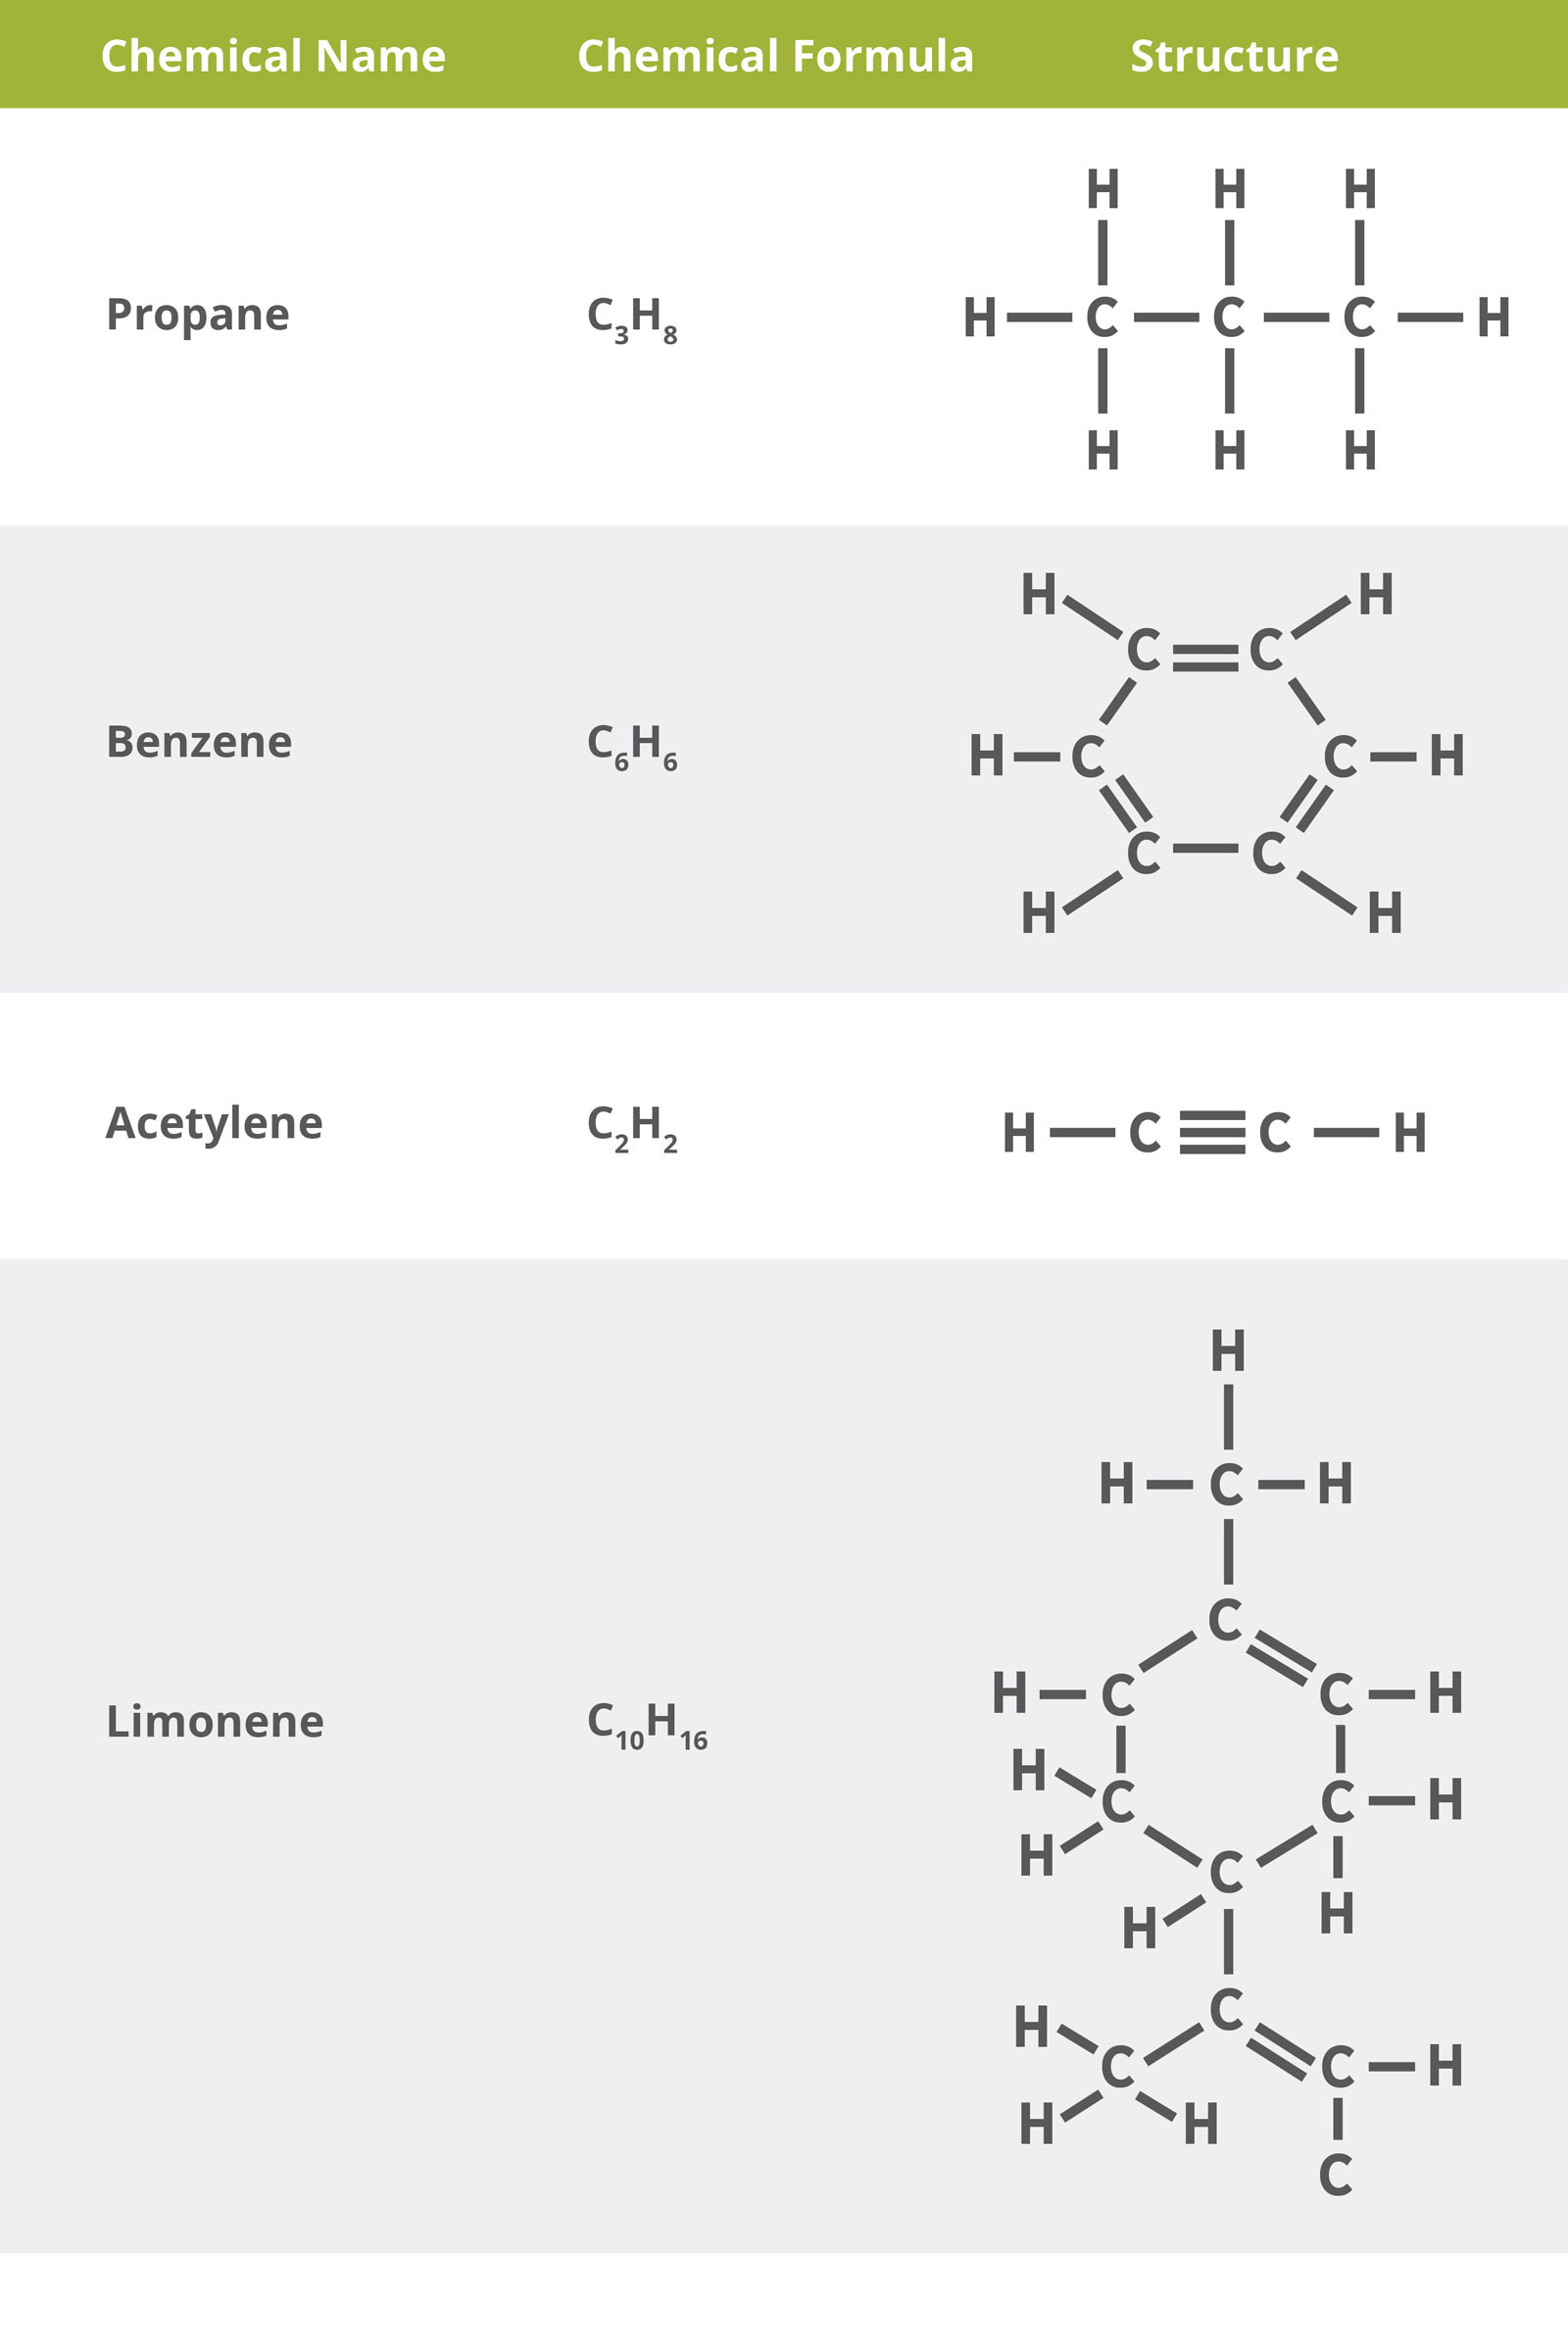 [DIAGRAM] Naming Compounds Diagram - MYDIAGRAM.ONLINE